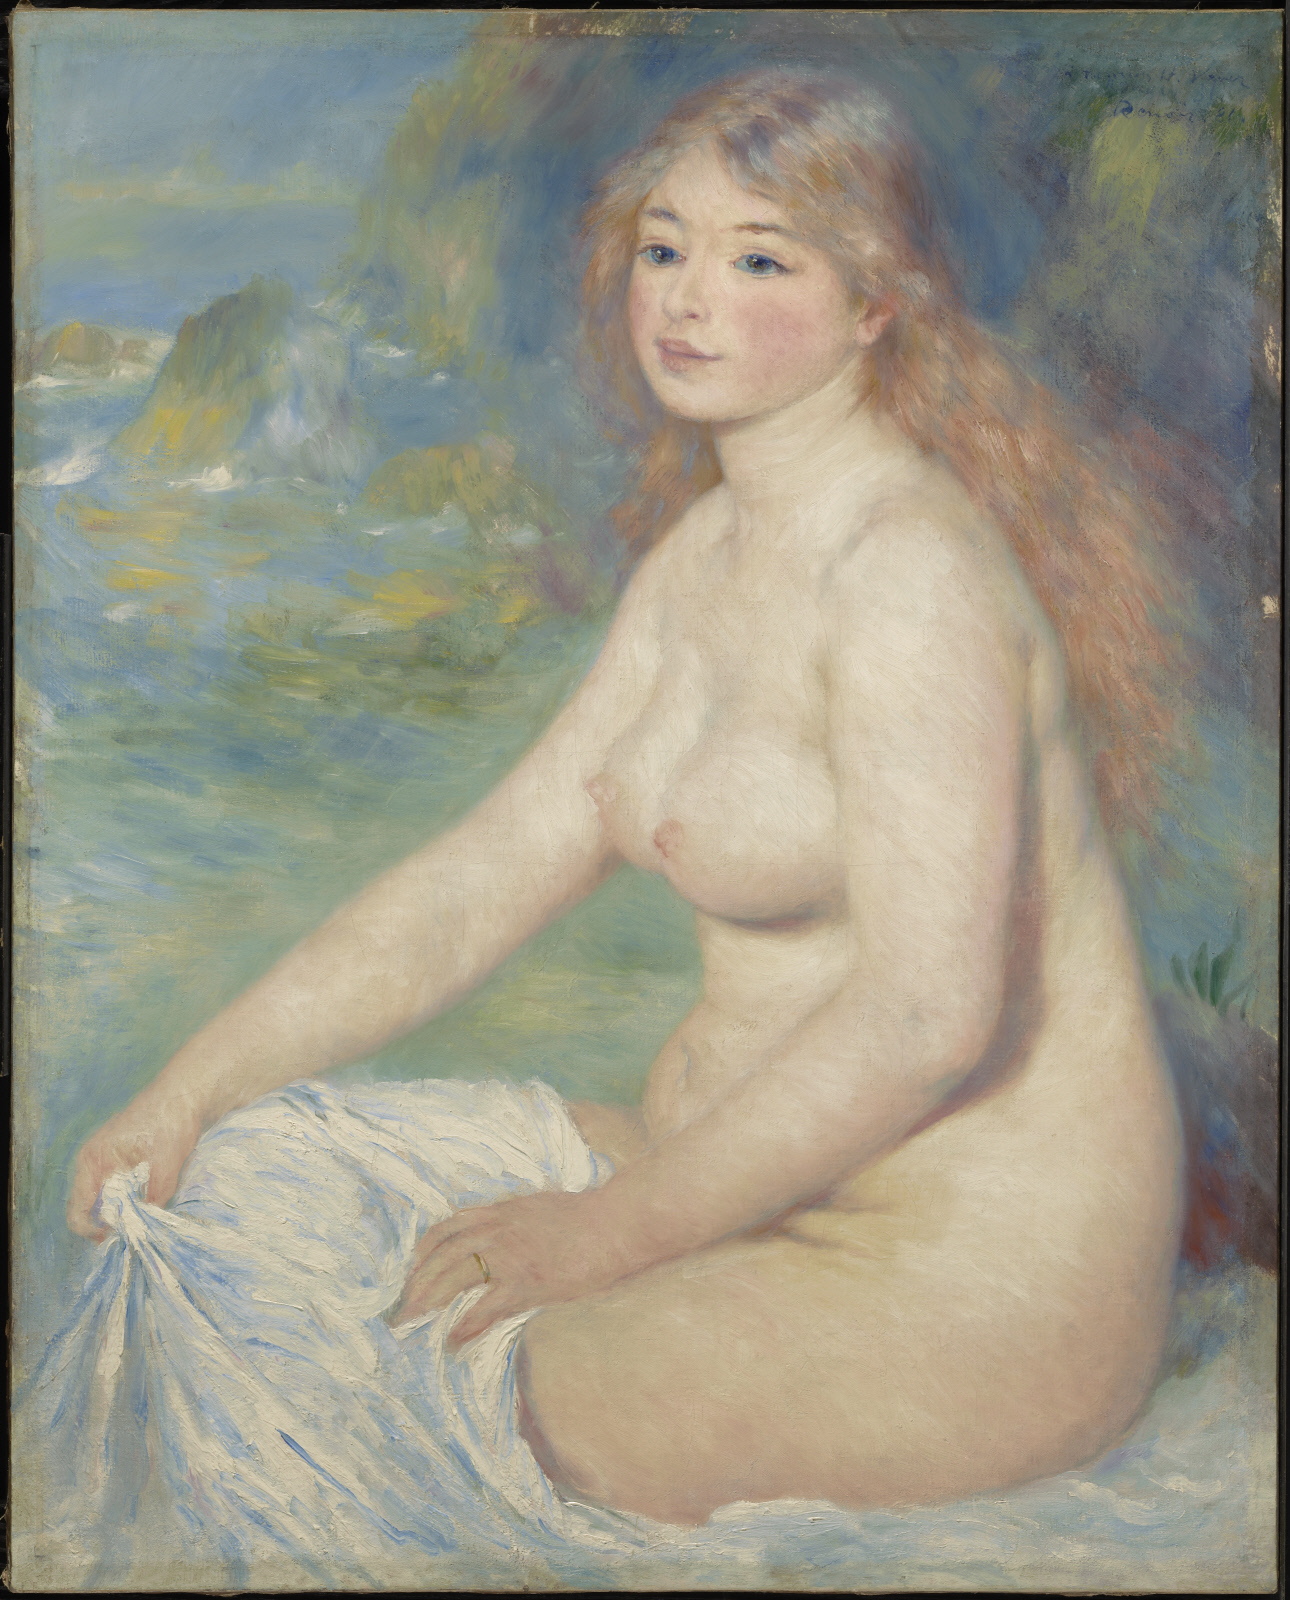 Blonde Bather by Pierre-Auguste Renoir - 1881 - 81.6 x 65.4 cm The Clark